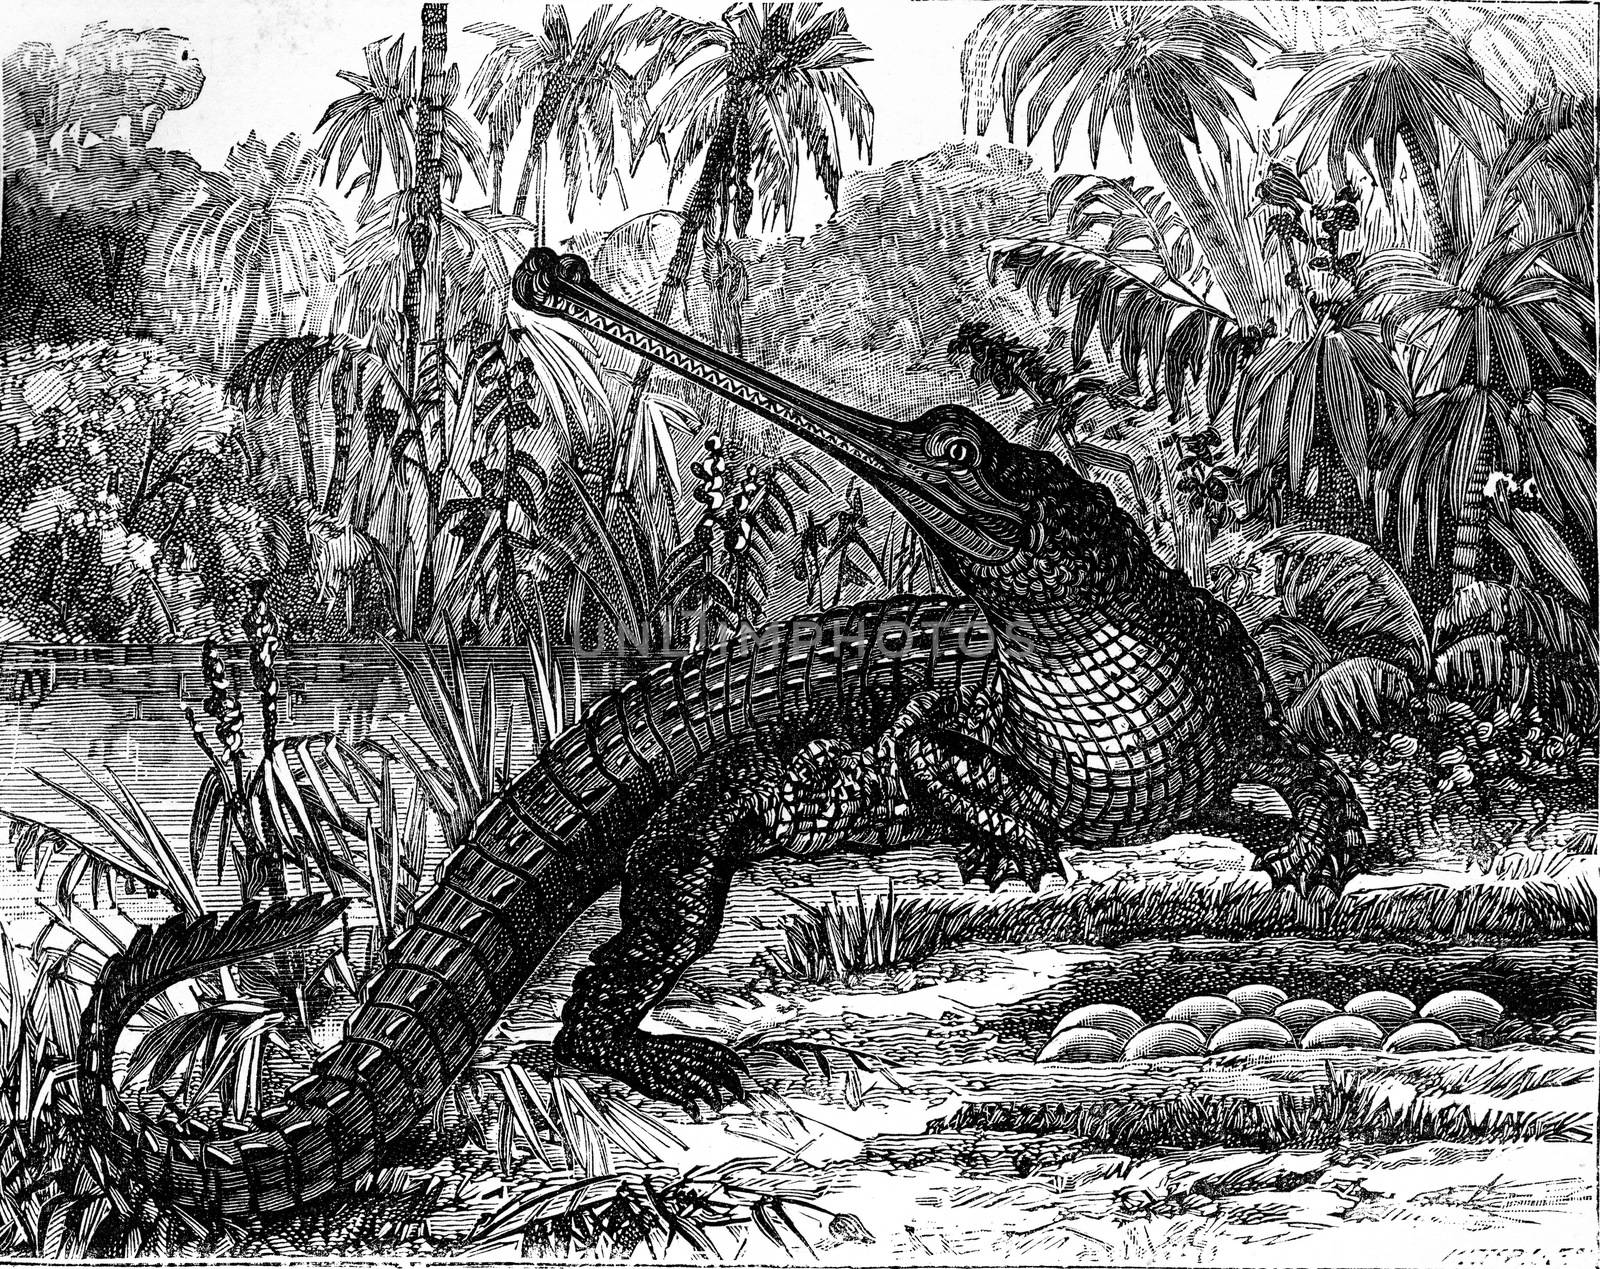 Viviparous generation comes from oviparous generation. Oviparous quadrupeds, Crocodiles and eggs, vintage engraved illustration. Earth before man – 1886.
